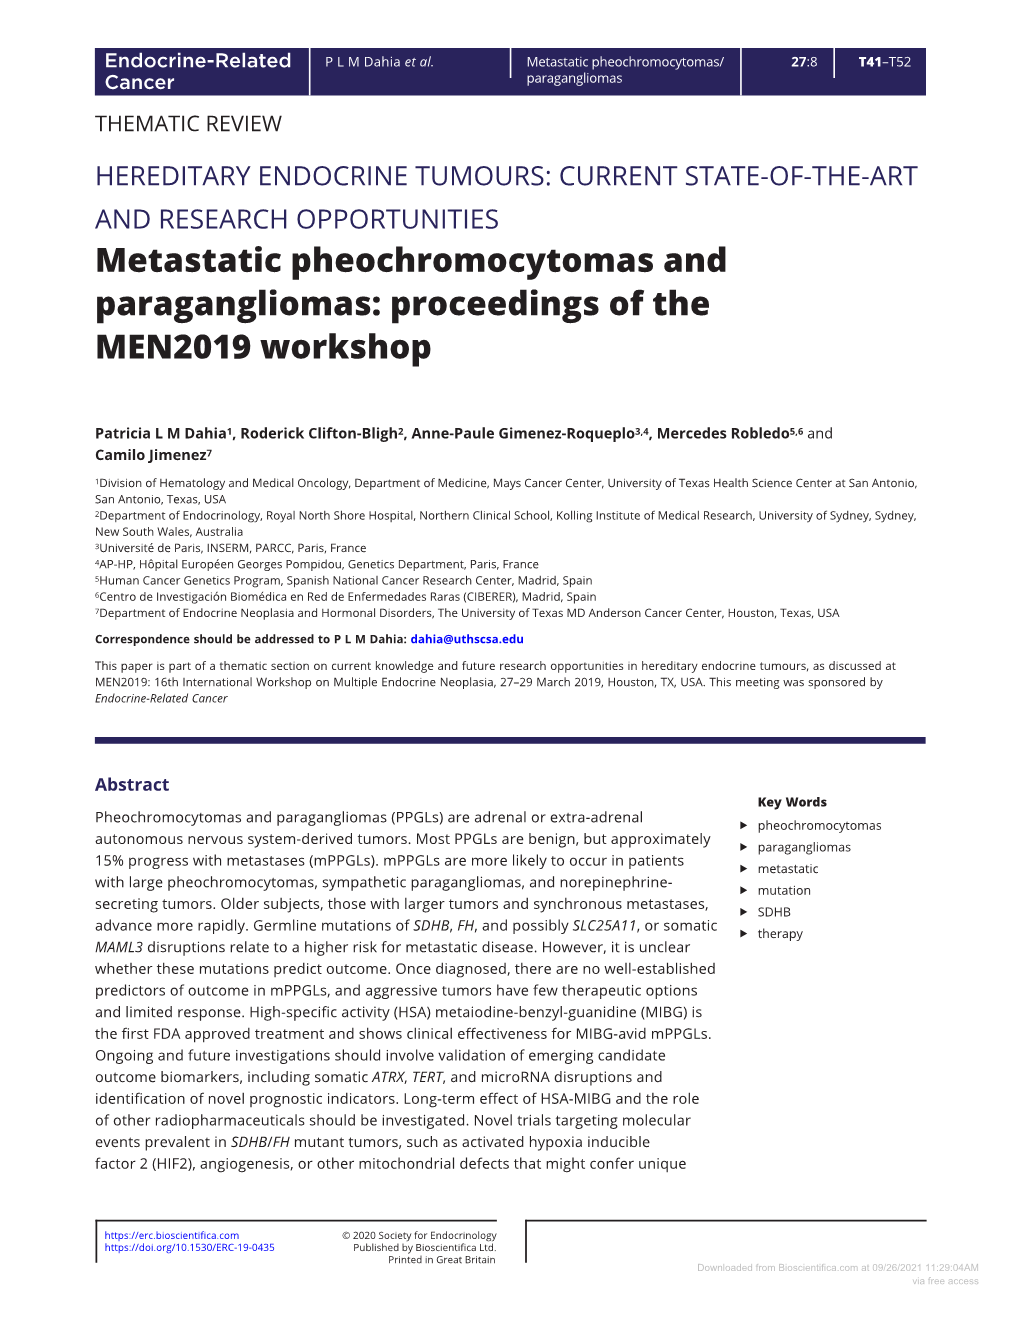 Metastatic Pheochromocytomas and Paragangliomas: Proceedings of the MEN2019 Workshop